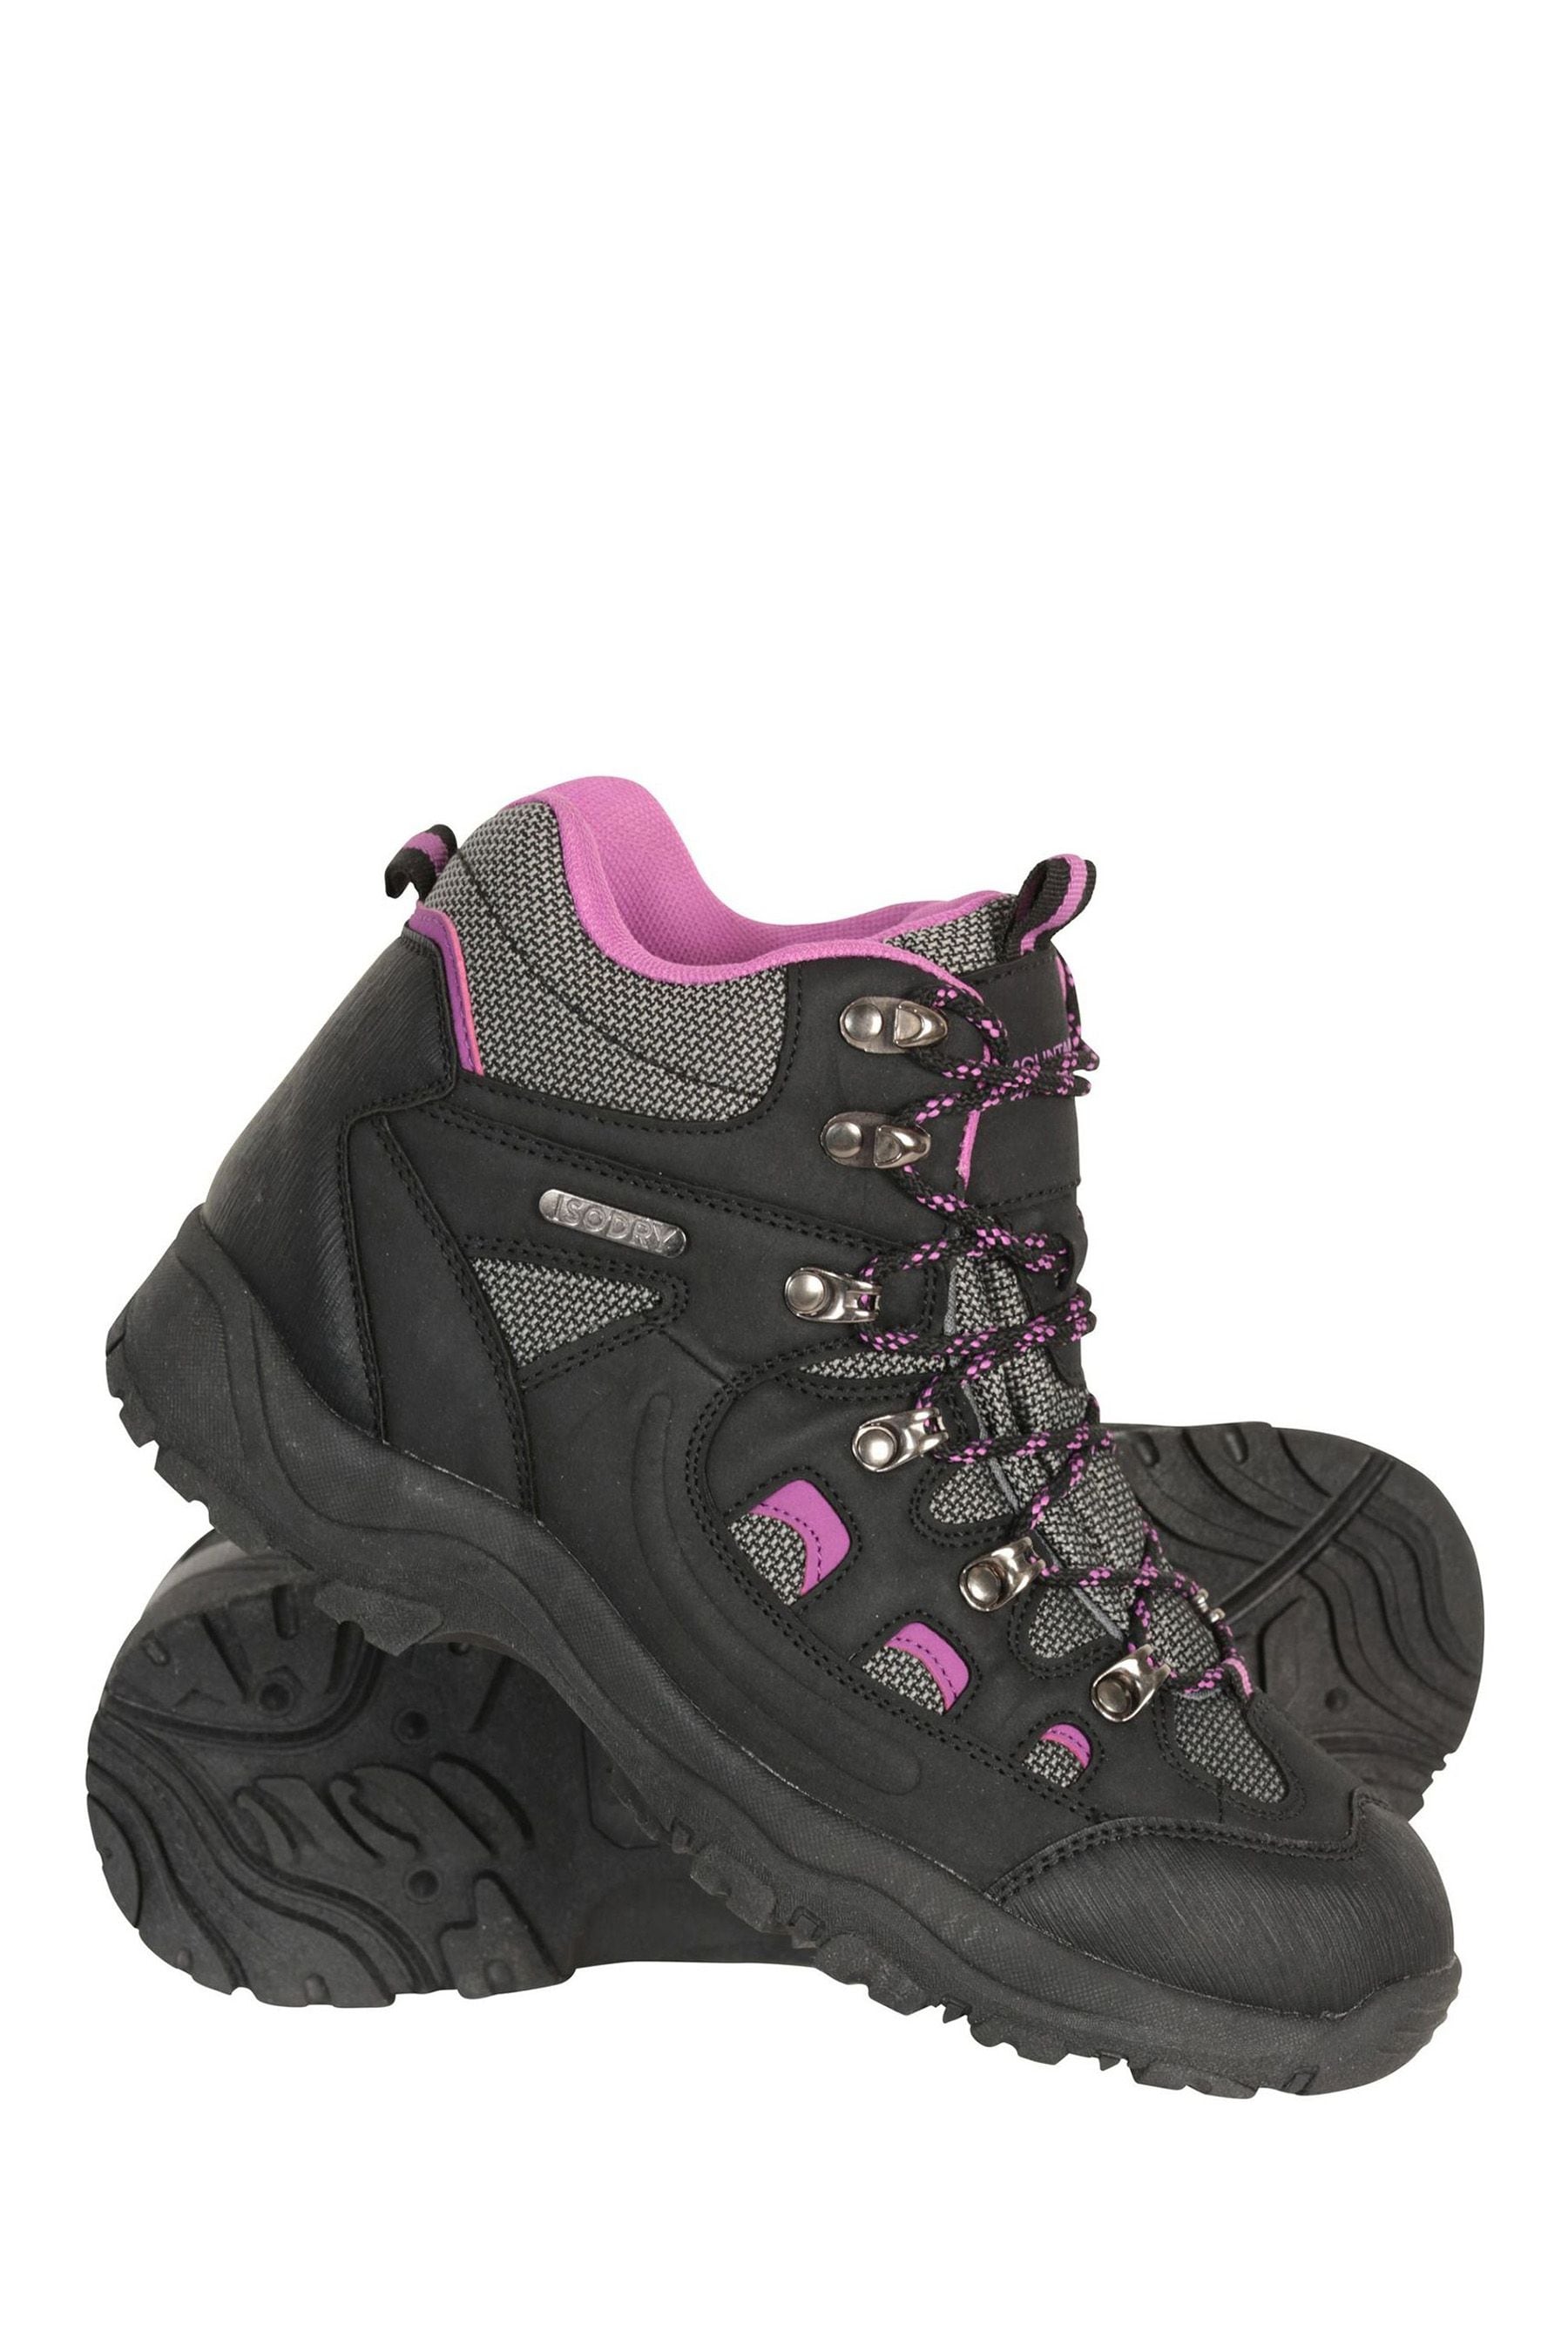 Buy Mountain Warehouse Adventurer Womens Waterproof Walking Boots from ...